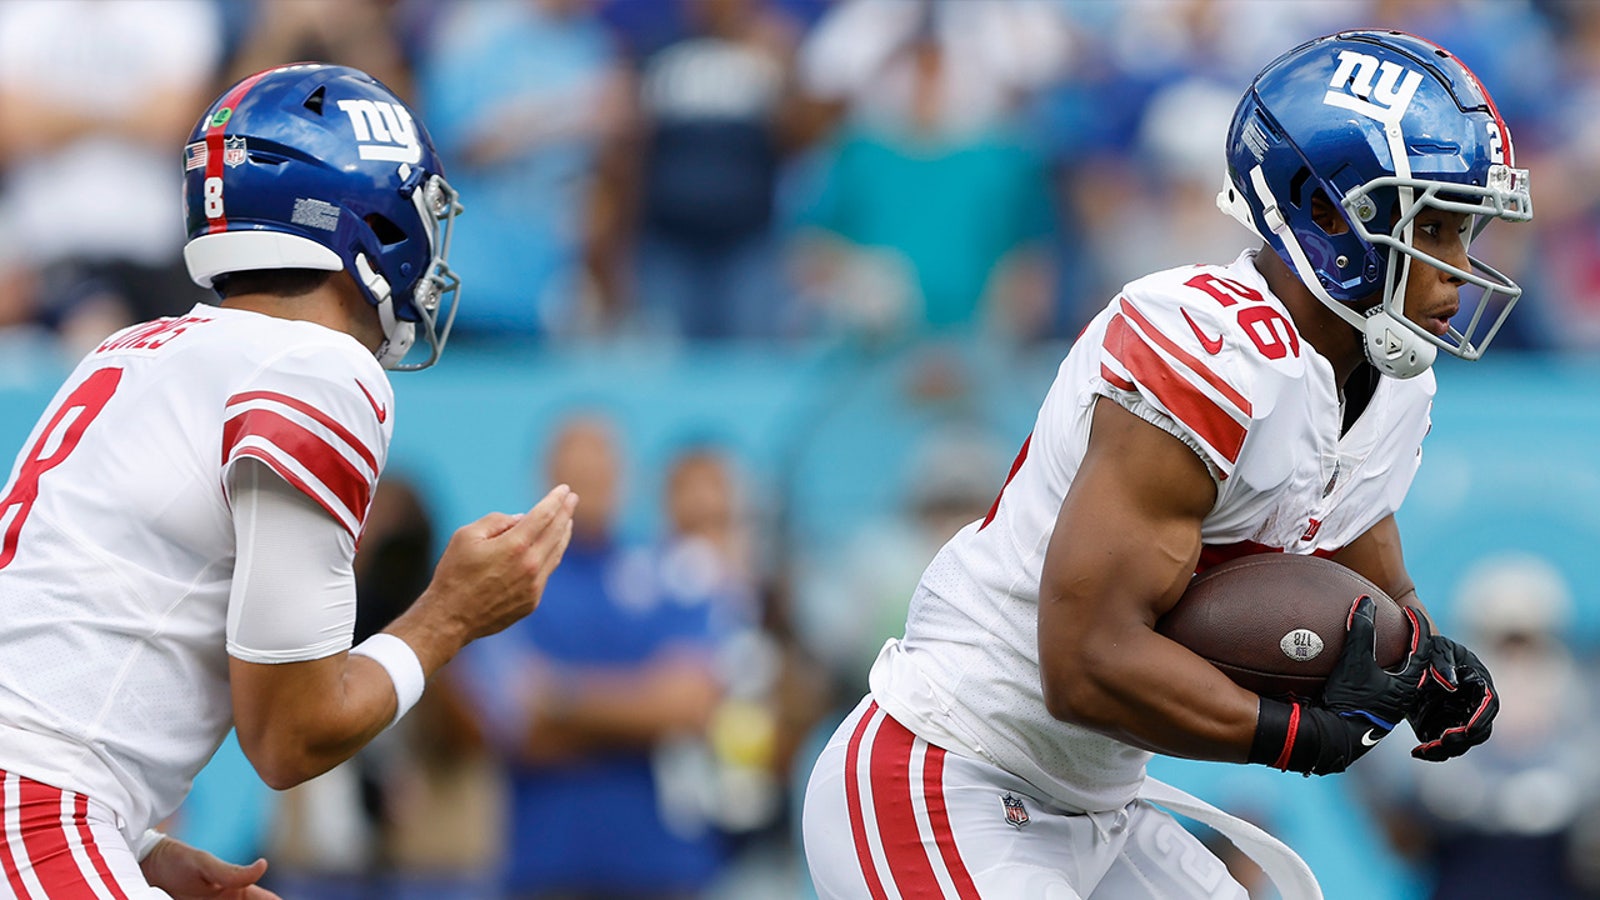 Saquon Barkley sparks Giants' comeback win over Titans